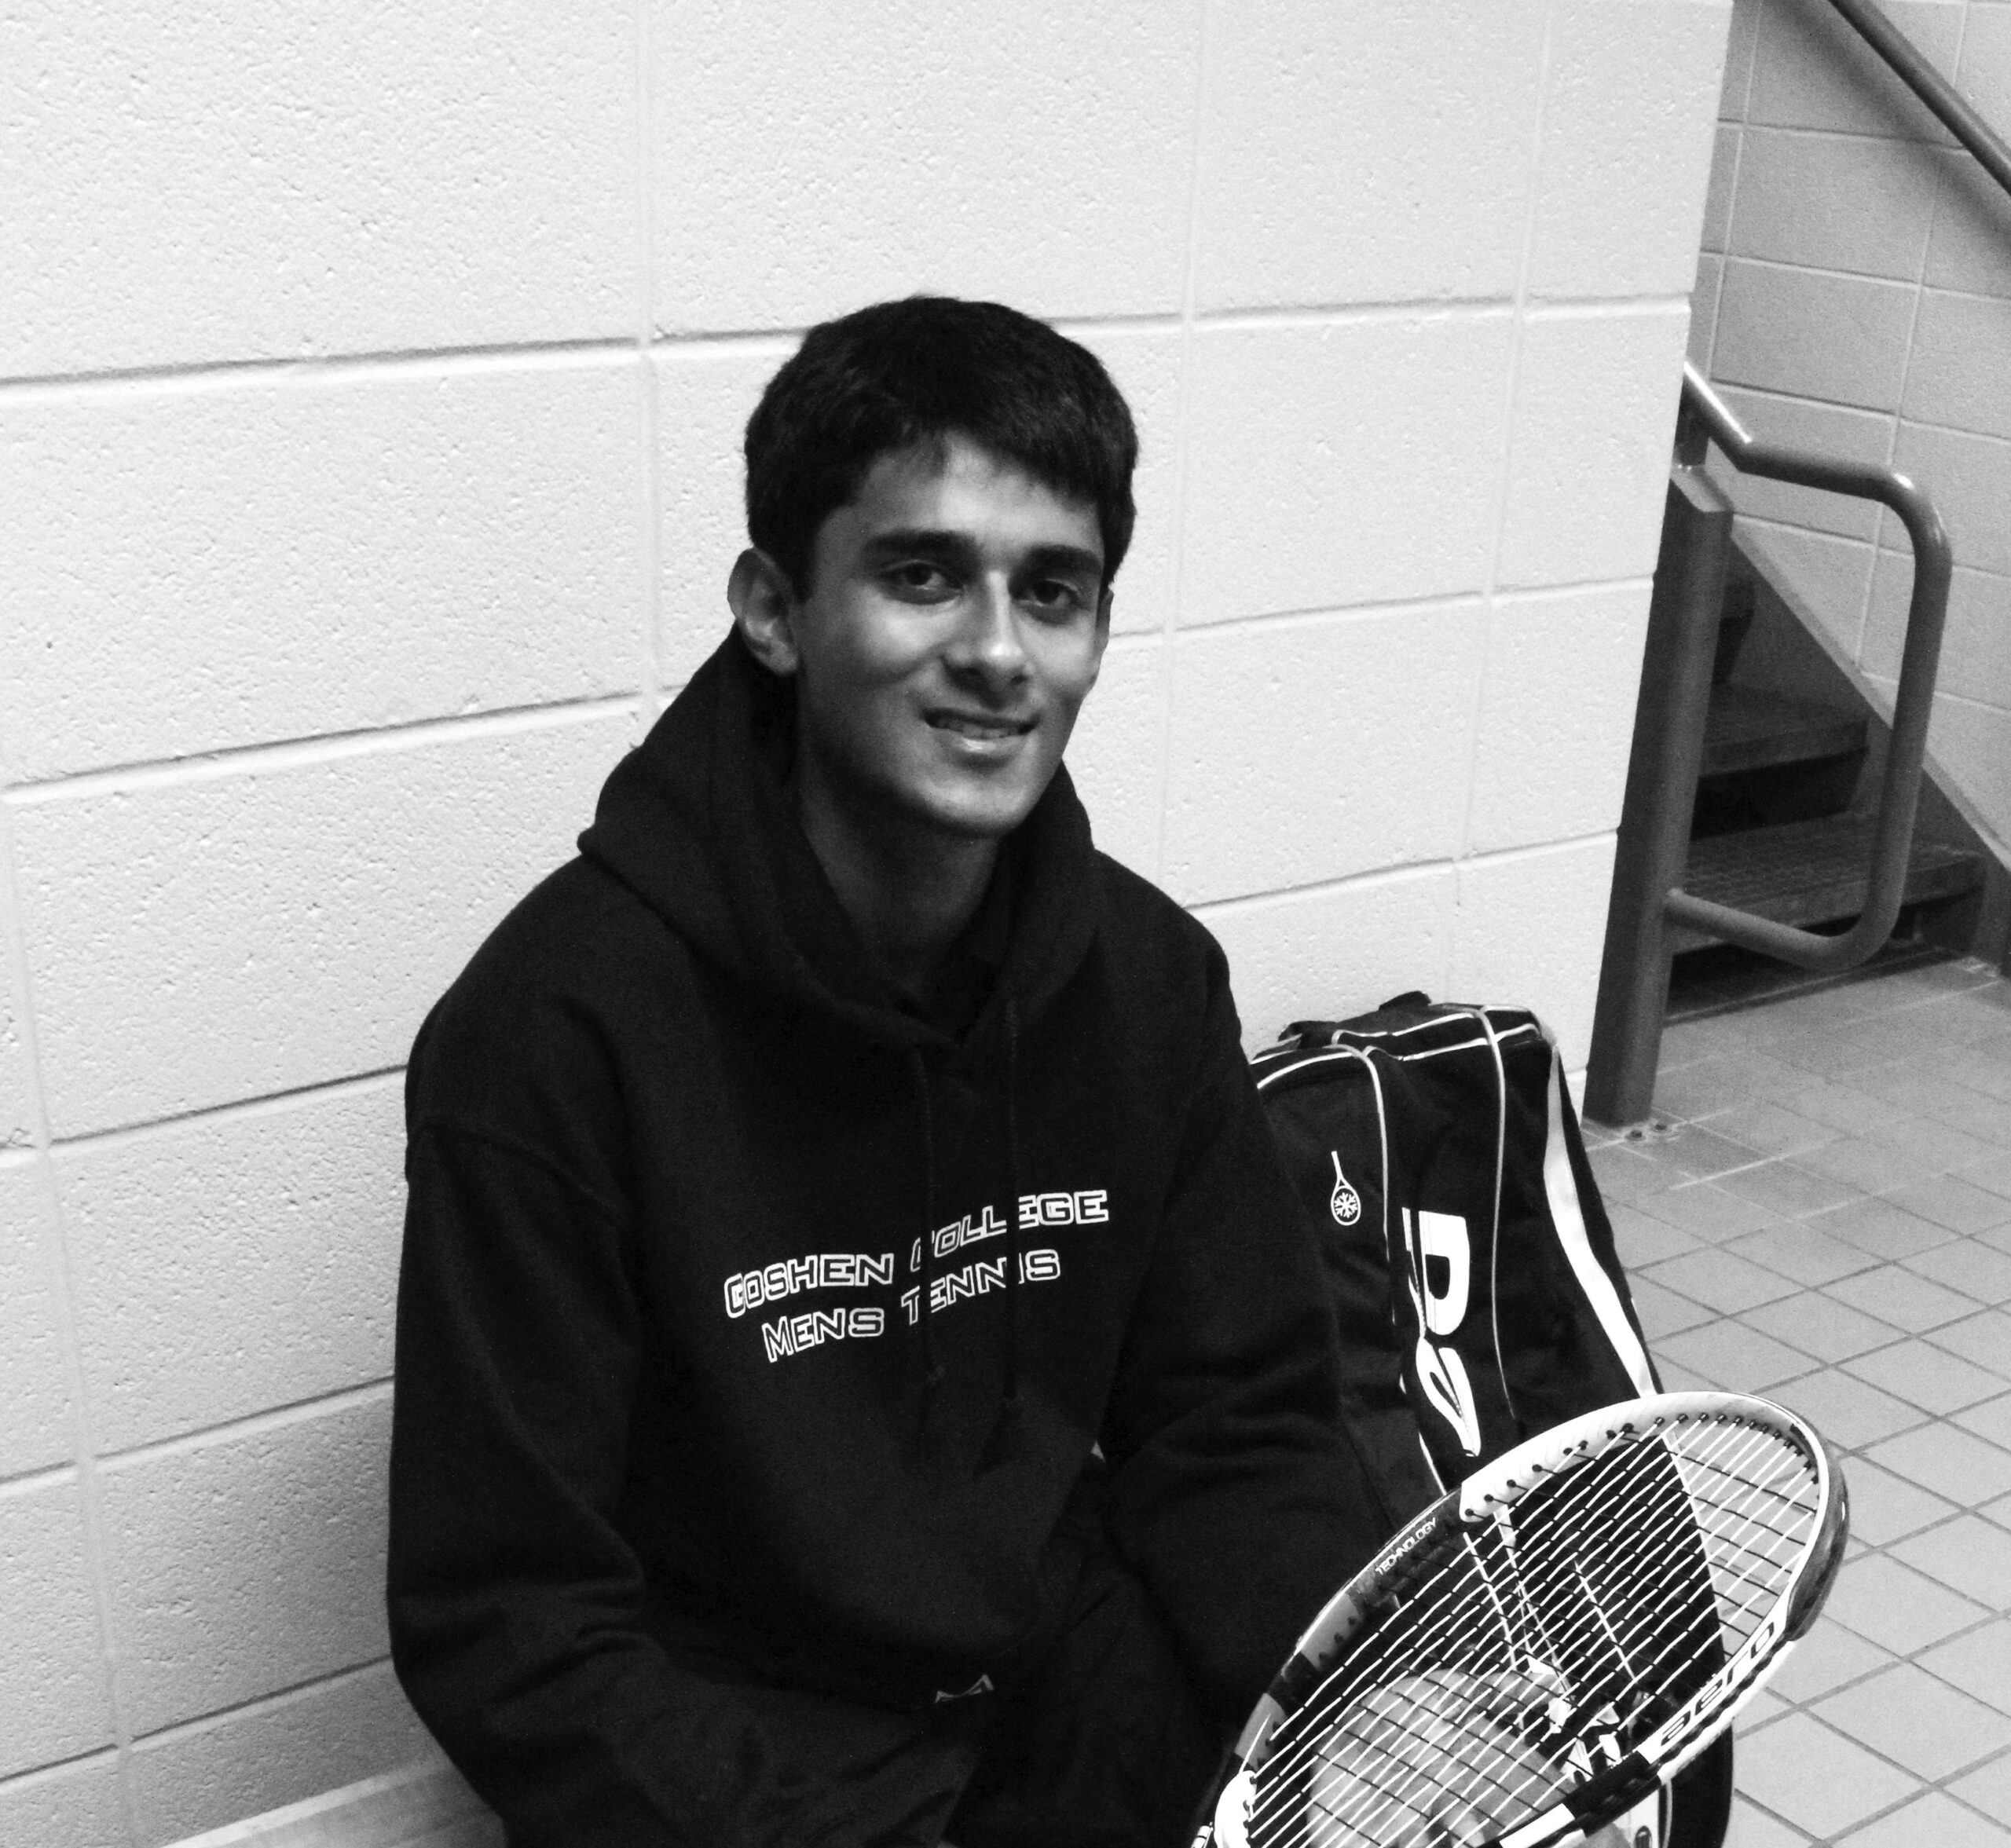 Siddratha Ratnutunga sits on the floor of the RFC with his tennis racket